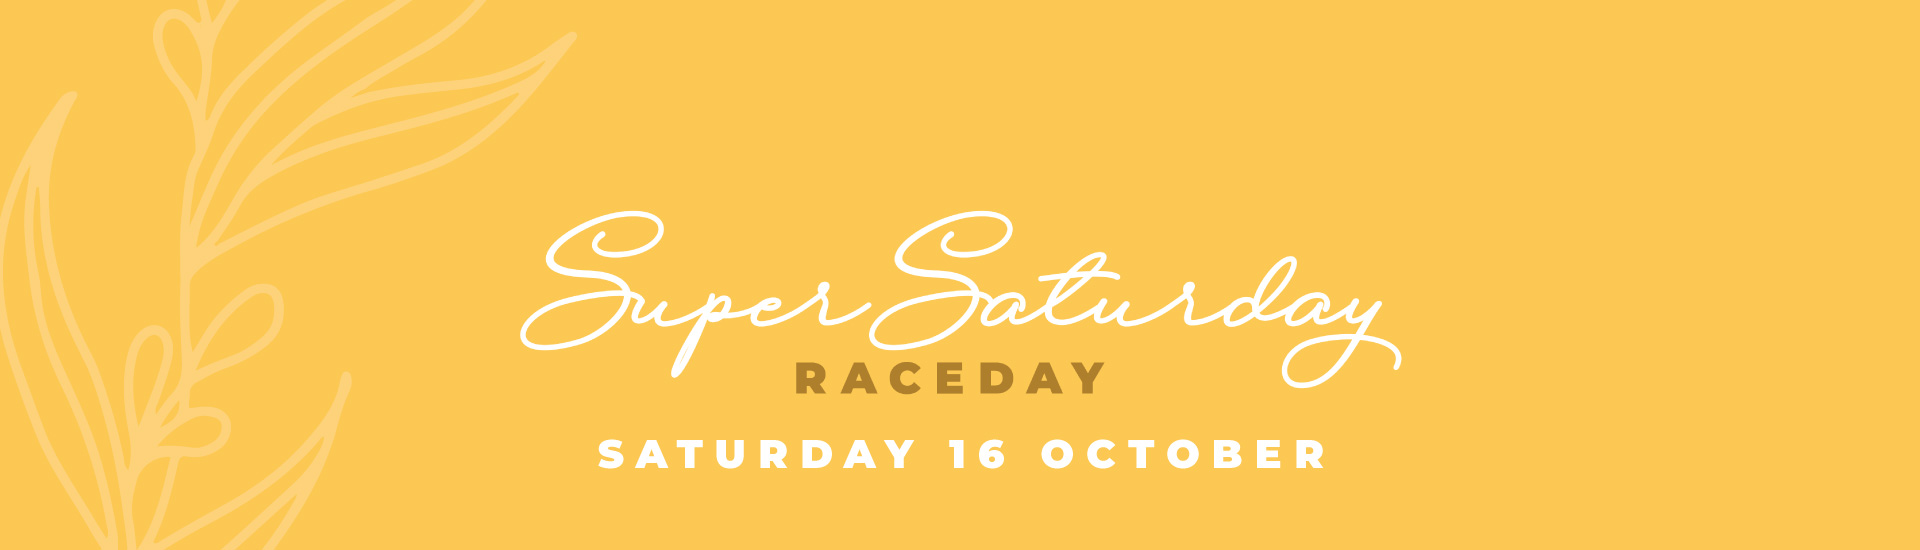 02_Super-Saturday-NS_Webpage-banner_1920x550 | Brisbane Racing Club